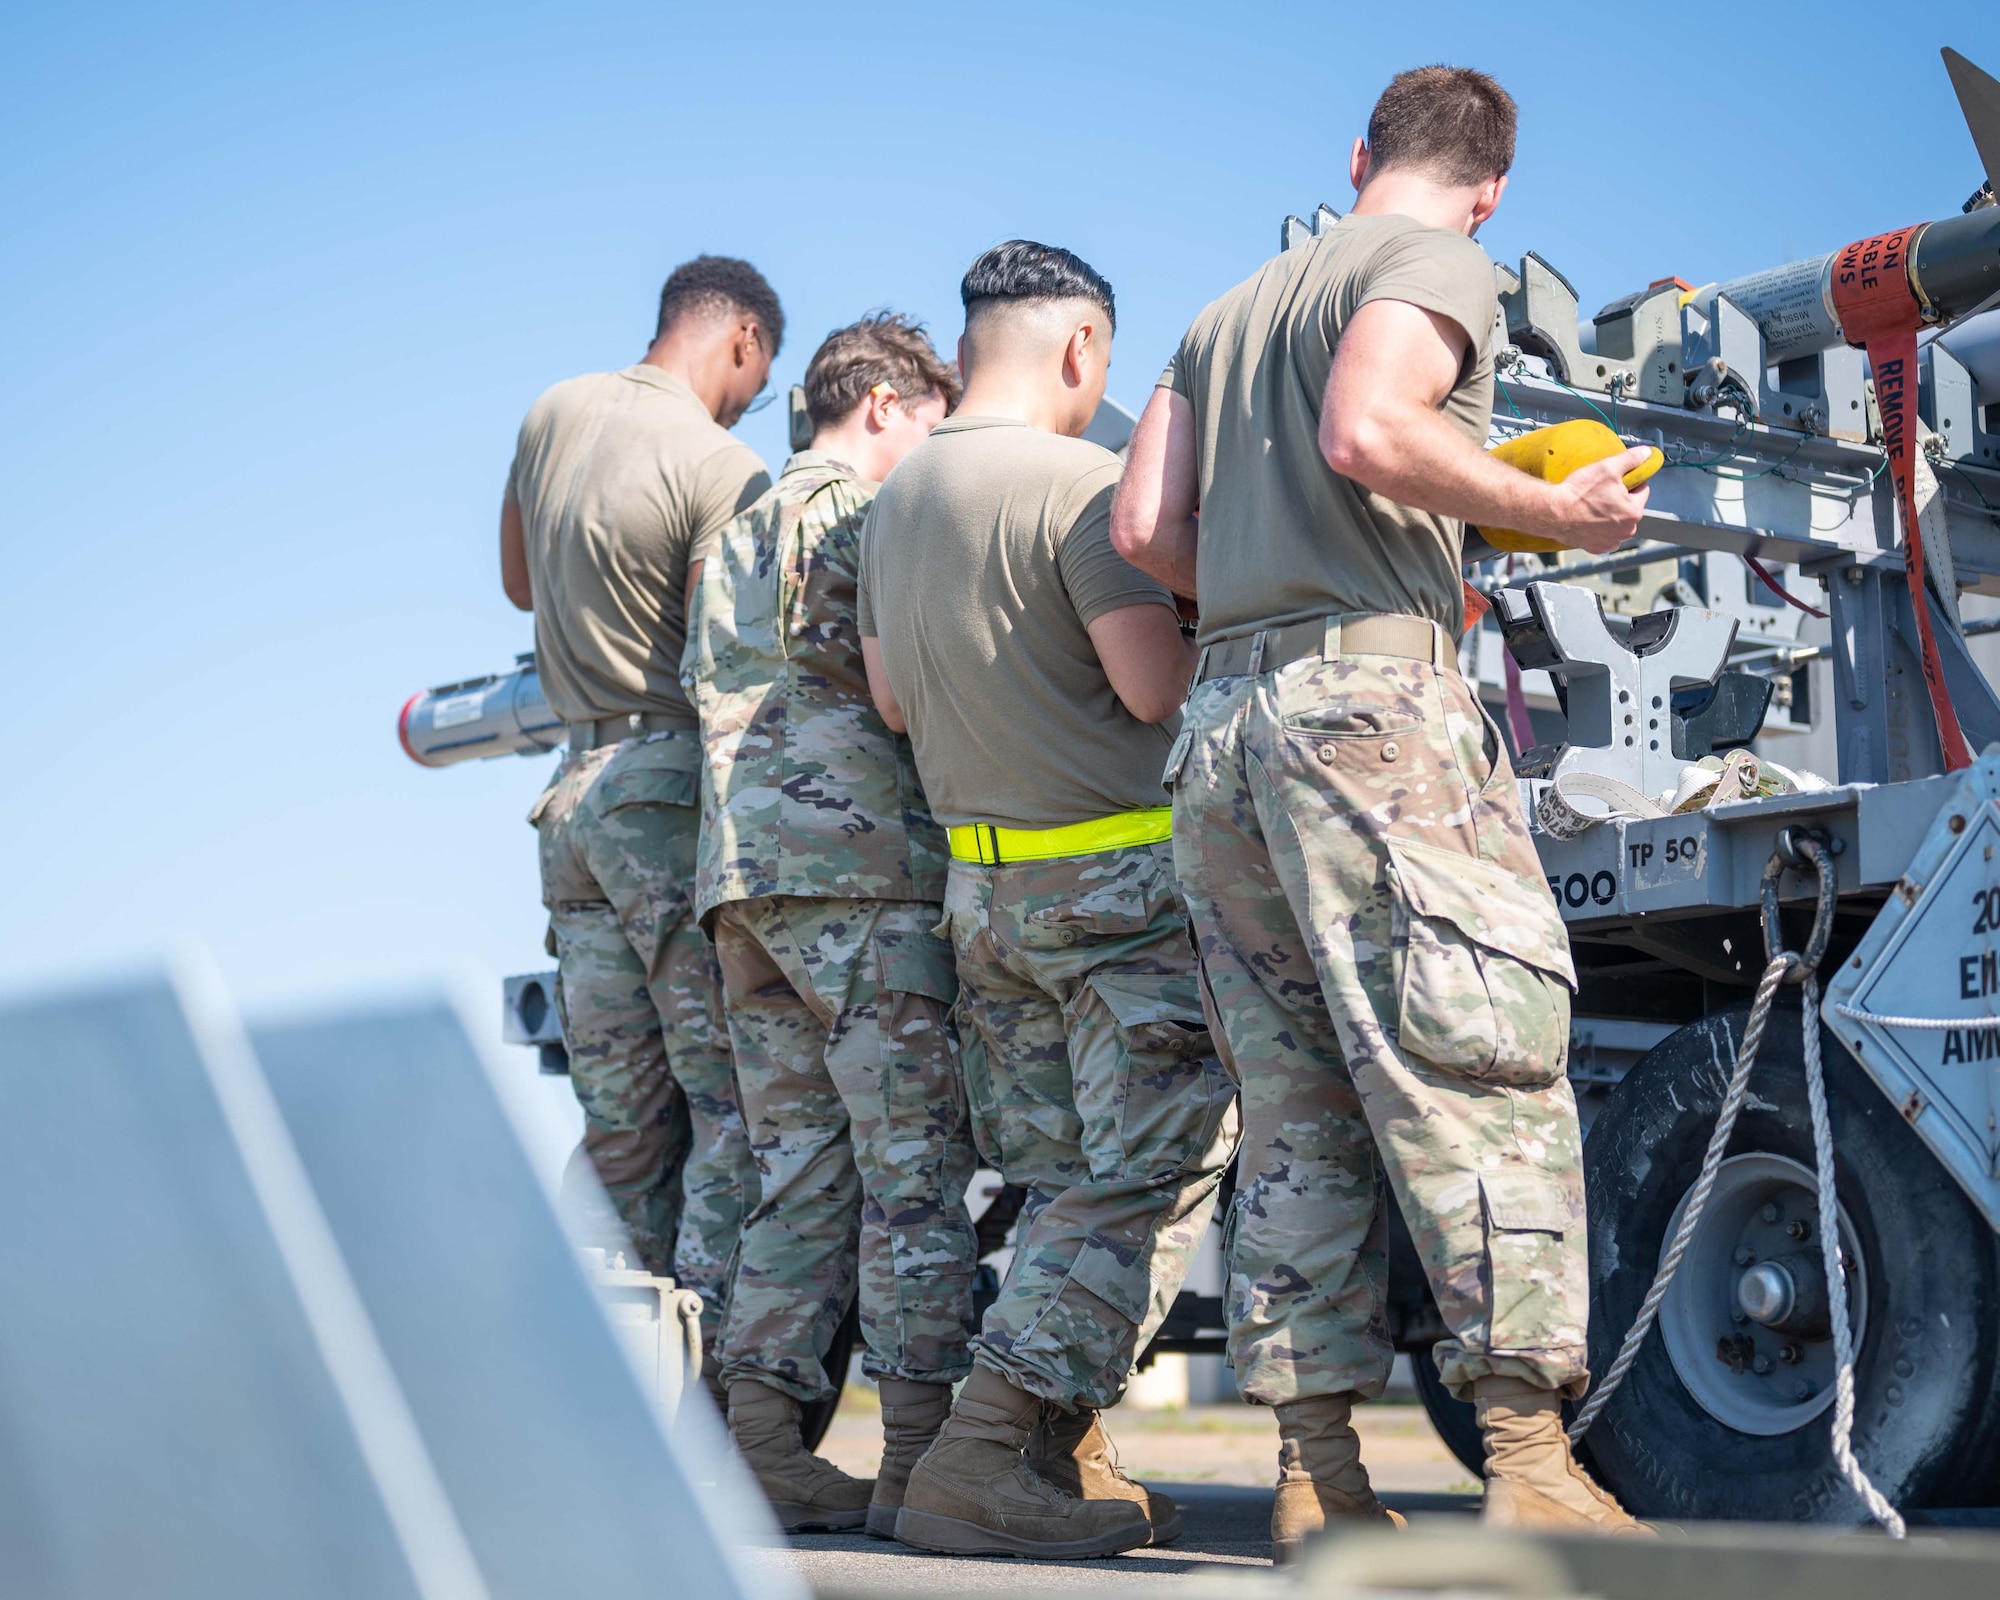 Four Airmen perform a team lift on a missile onto a transportation unit.